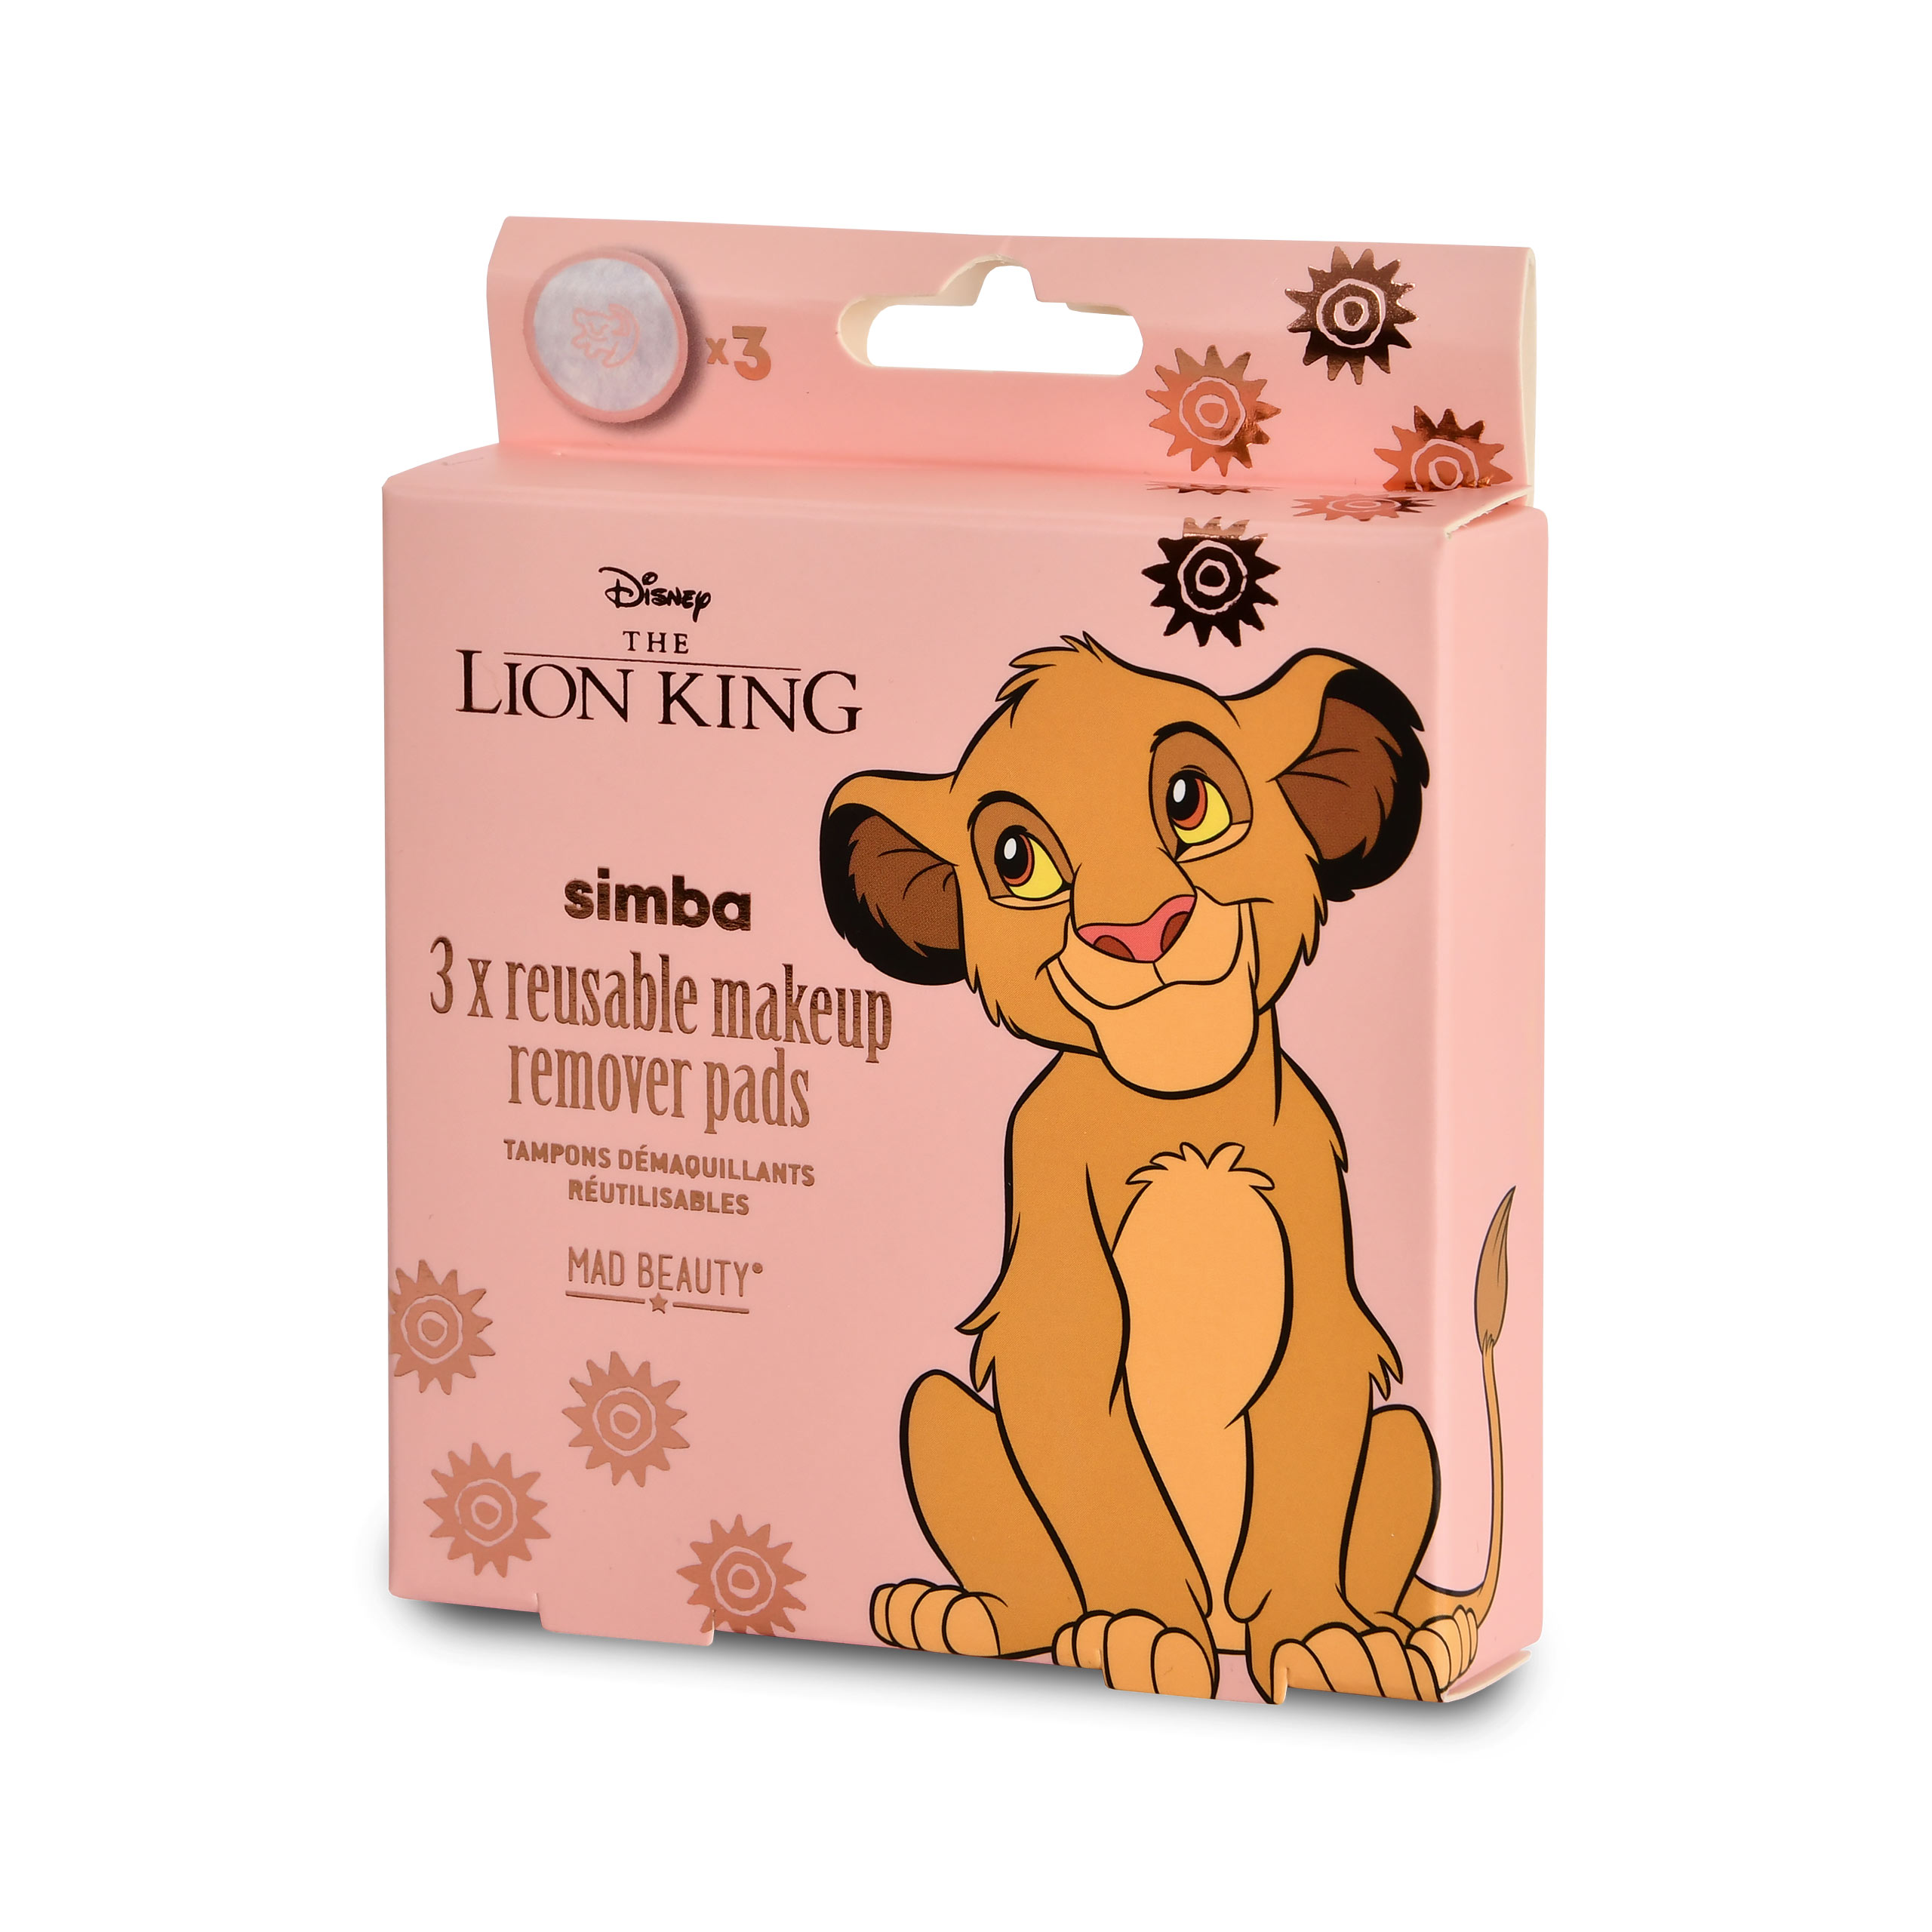 The Lion King - Simba Makeup Remover Pads